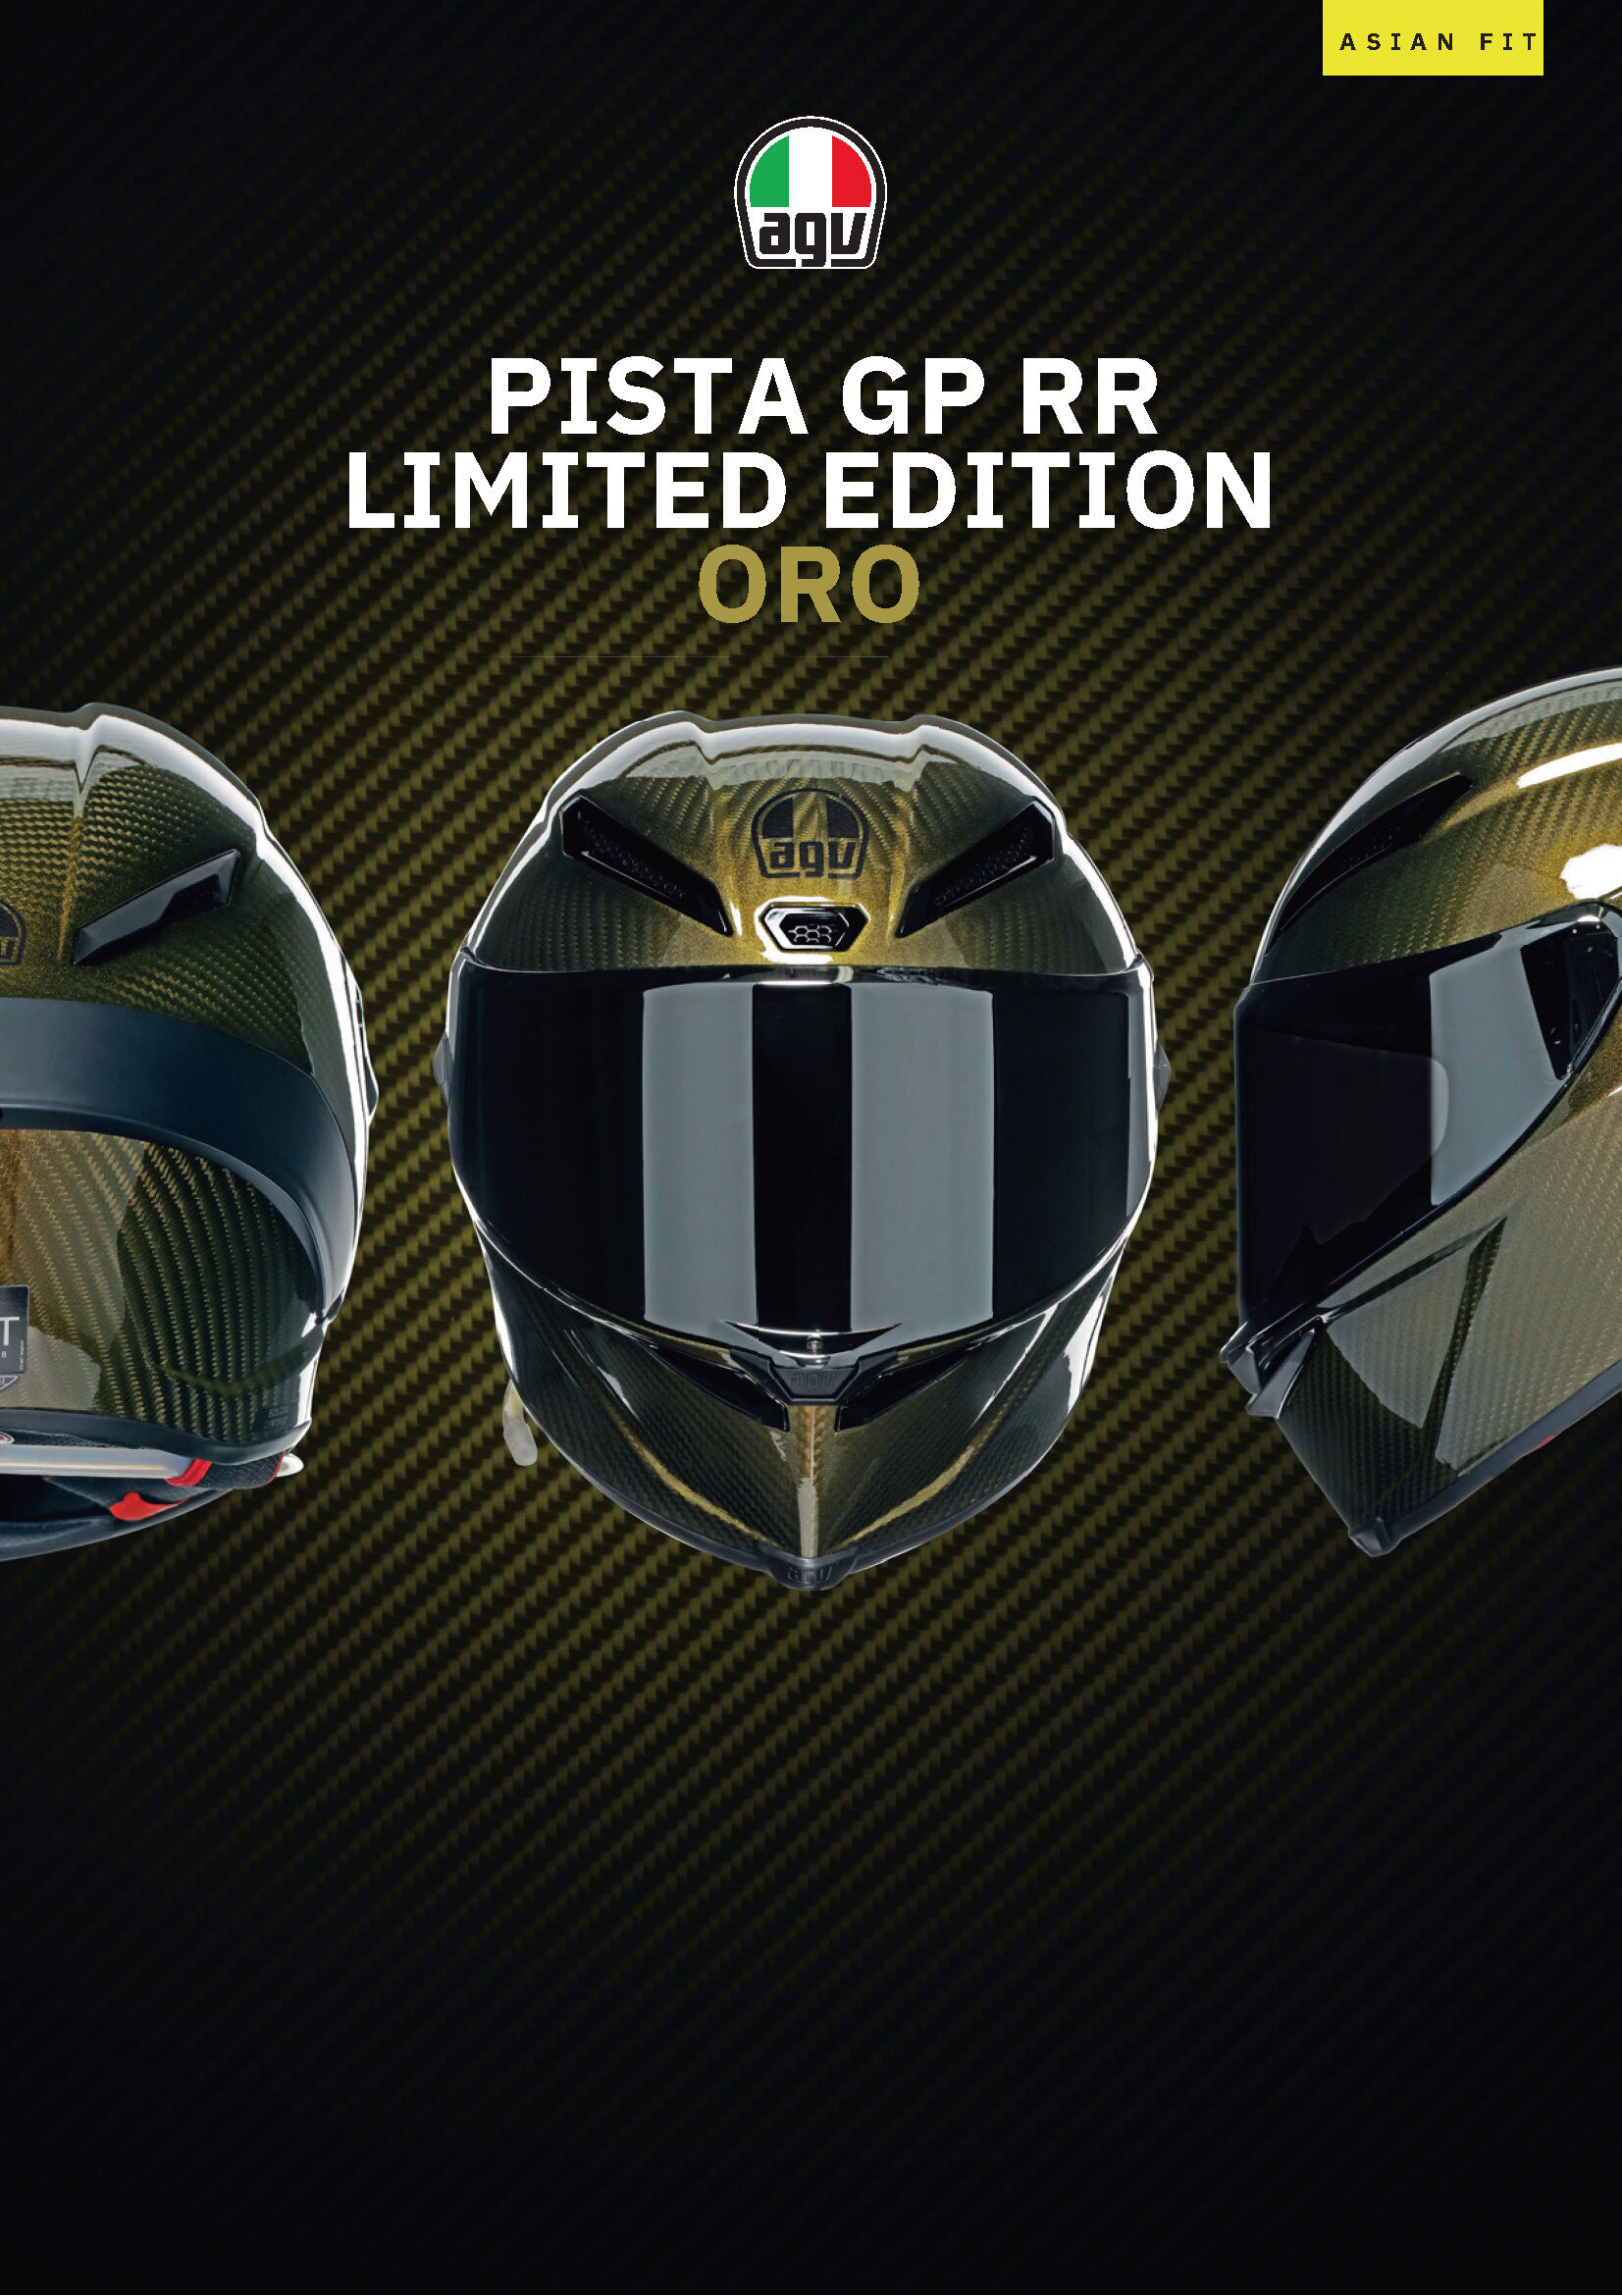 PISTA GP RRの限定モデル「PISTA GP RR ORO」予約開始！